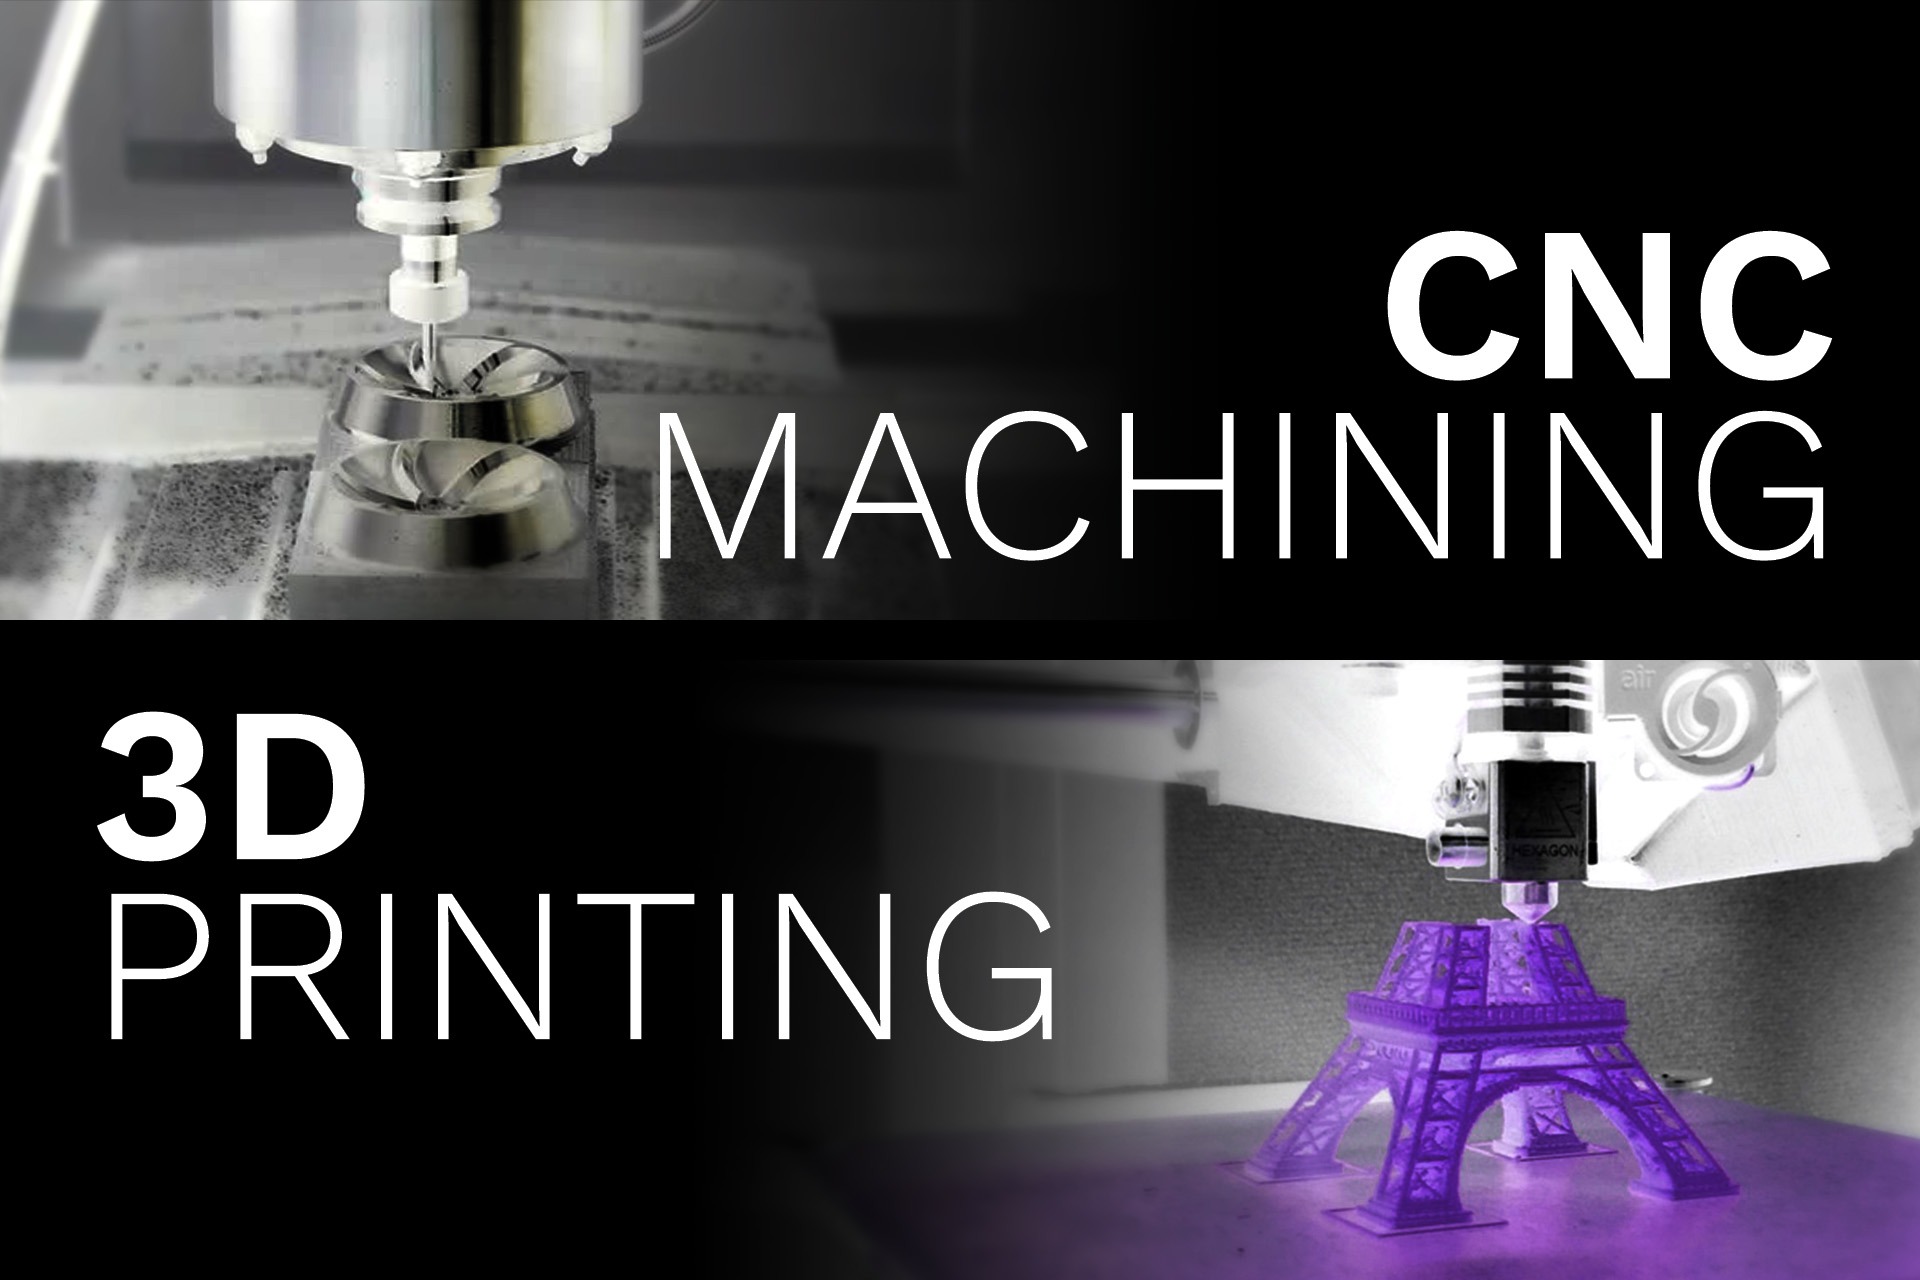 CNC Machines vs. 3D Printers